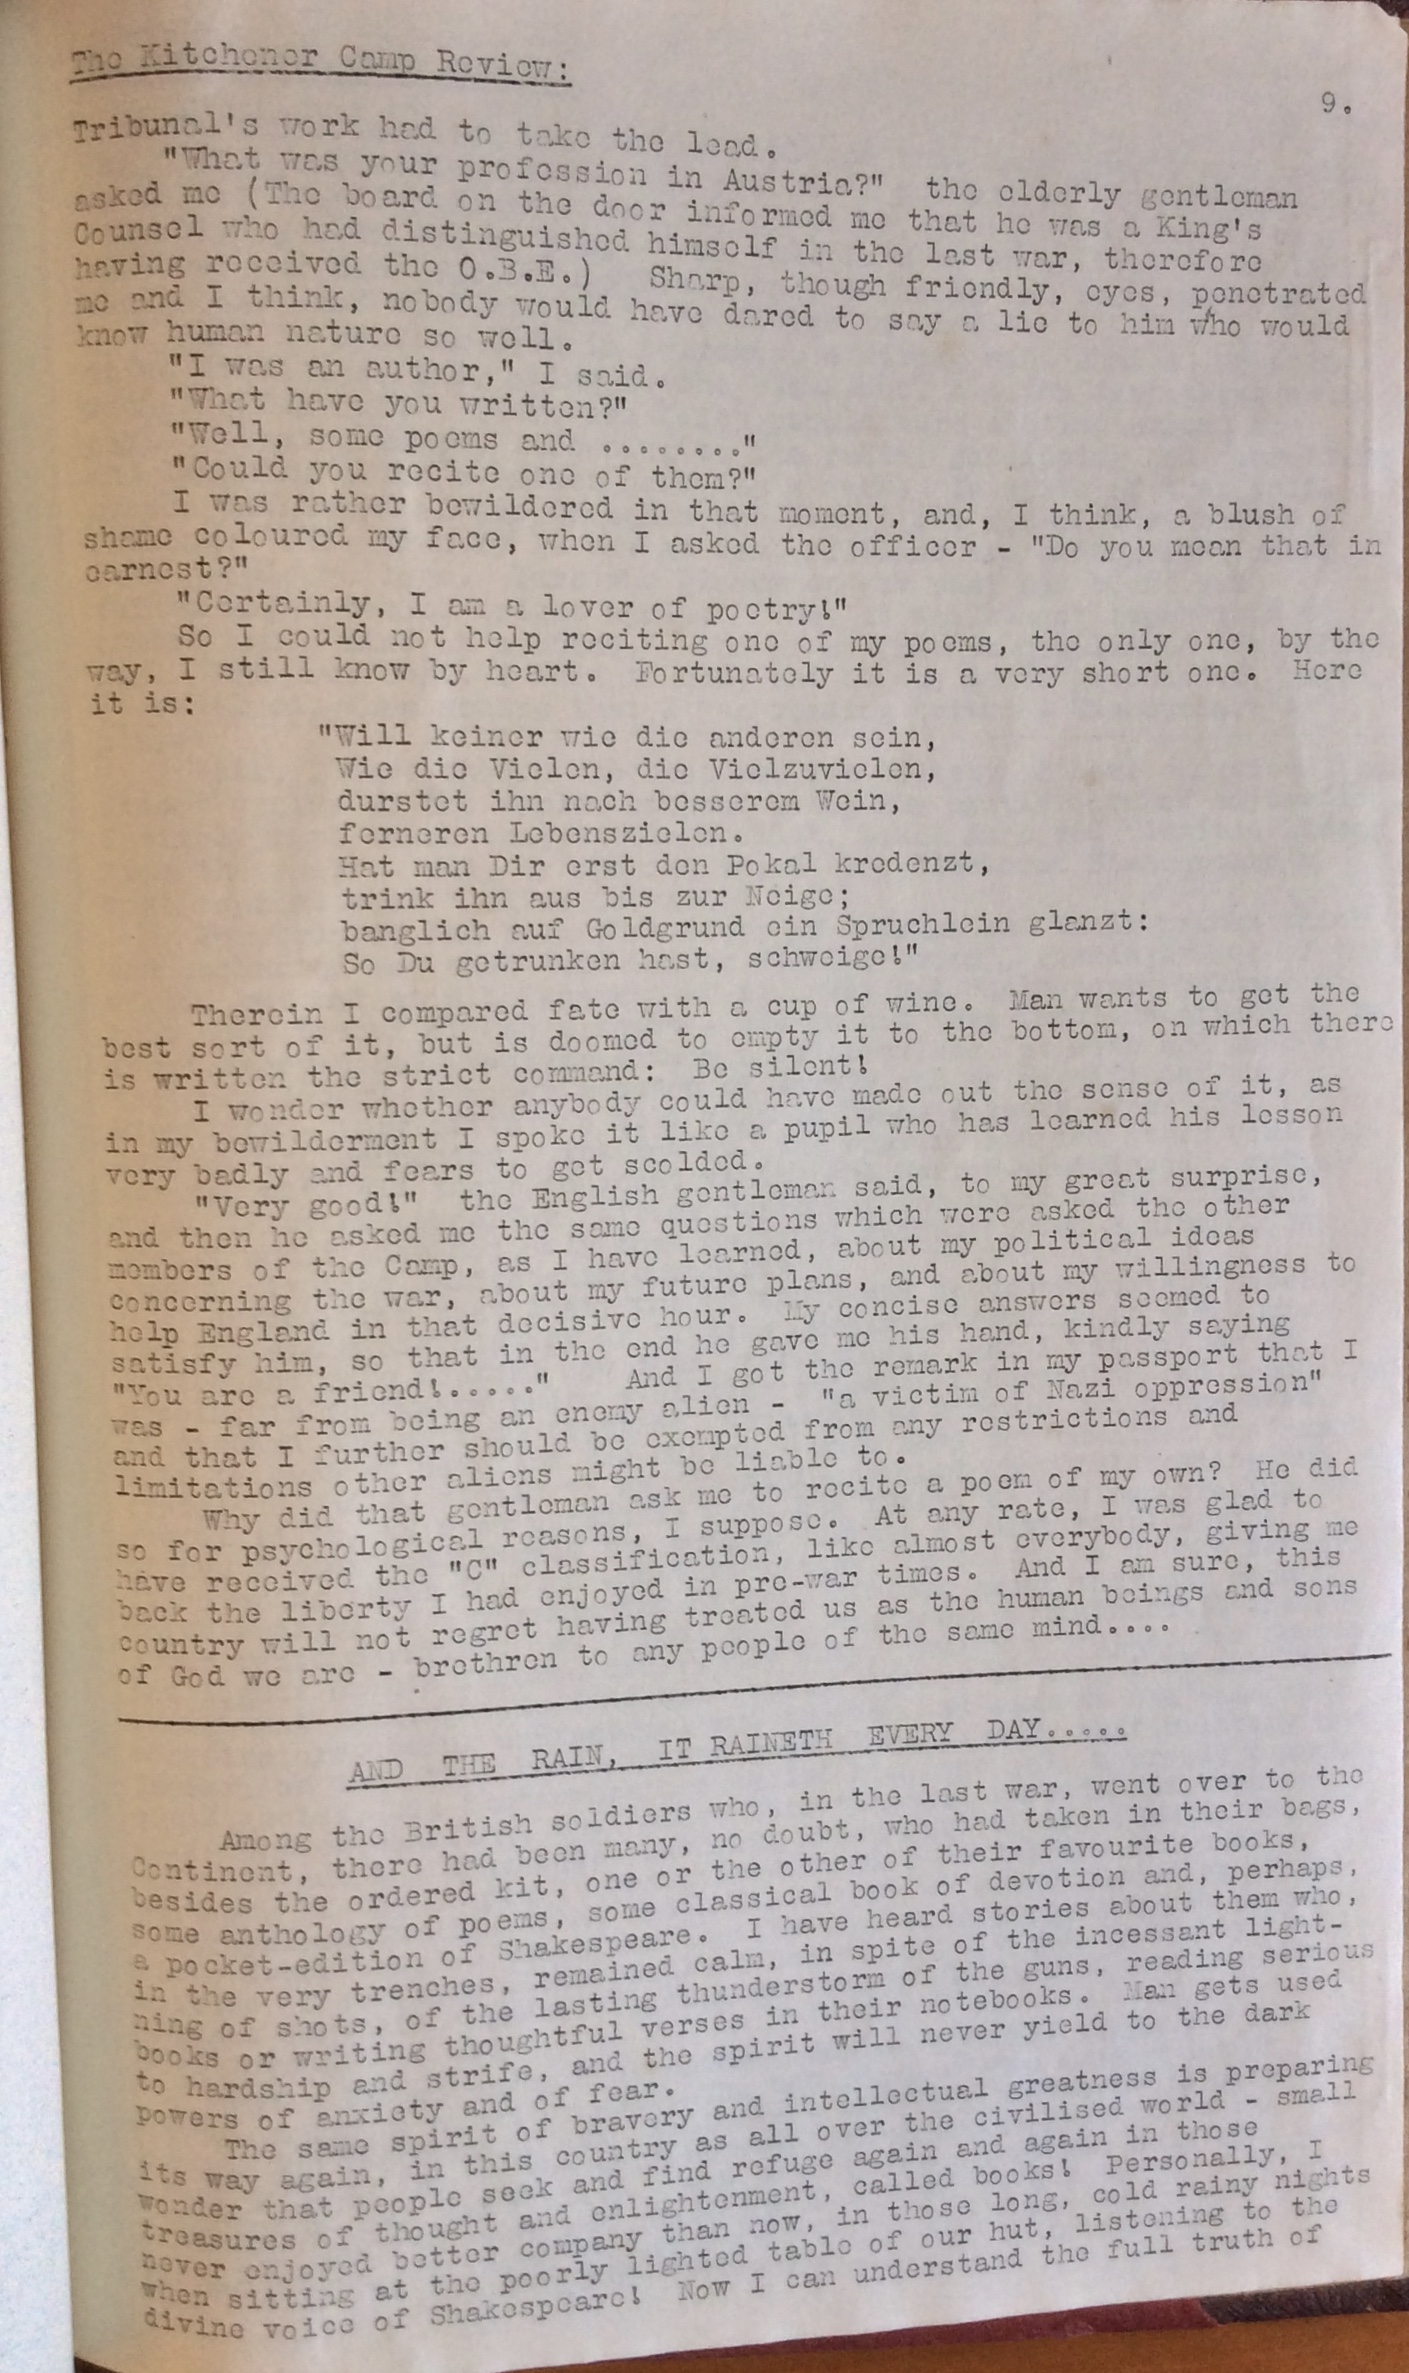 Kitchener Camp Review, November 1939, page 9